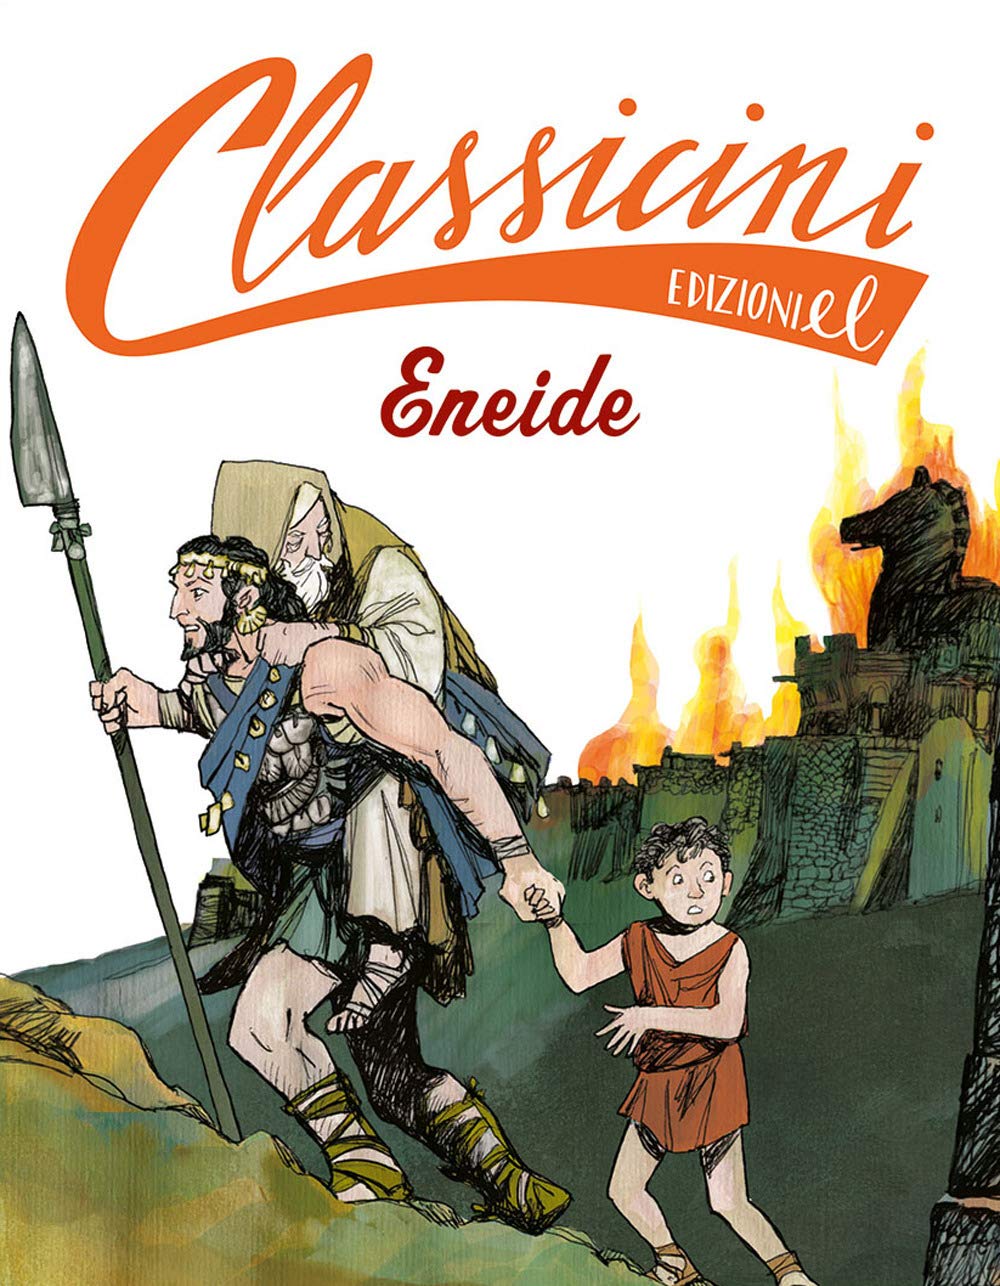 Classicini - Eneide